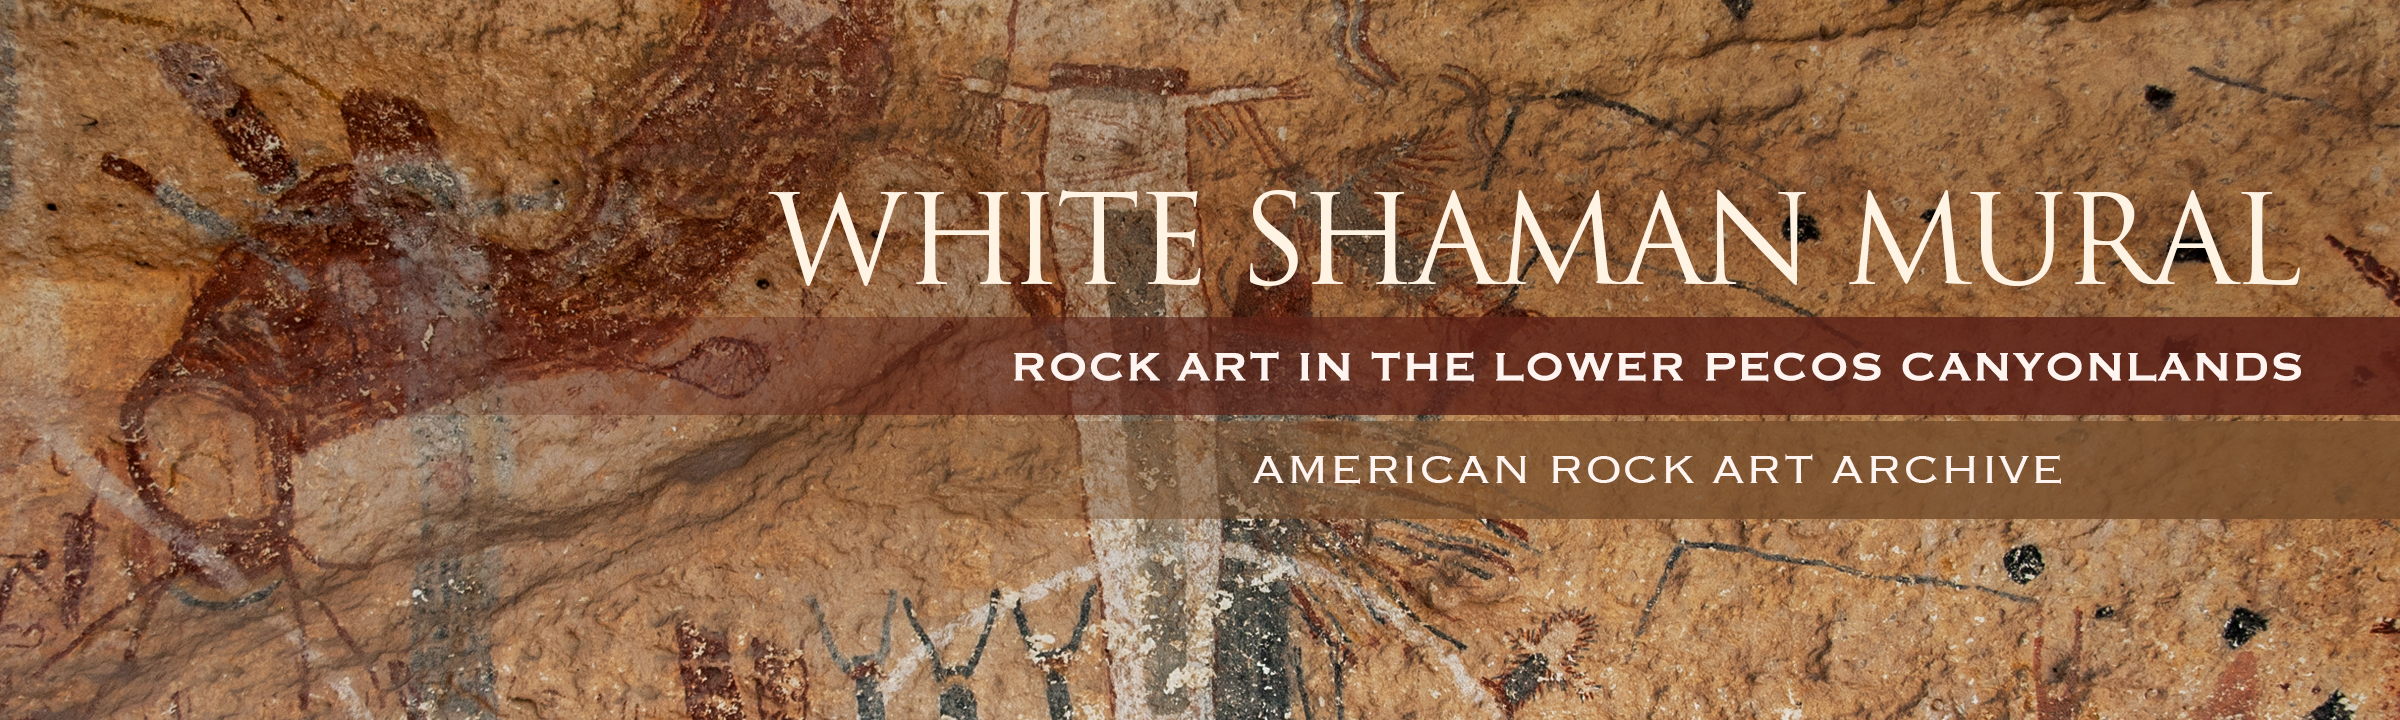 White Shaman Panel Lower Pecos Canyonlands Rock Art America Texas United States Petroglyphs Pictographs Archaeology Prehistory Rockart